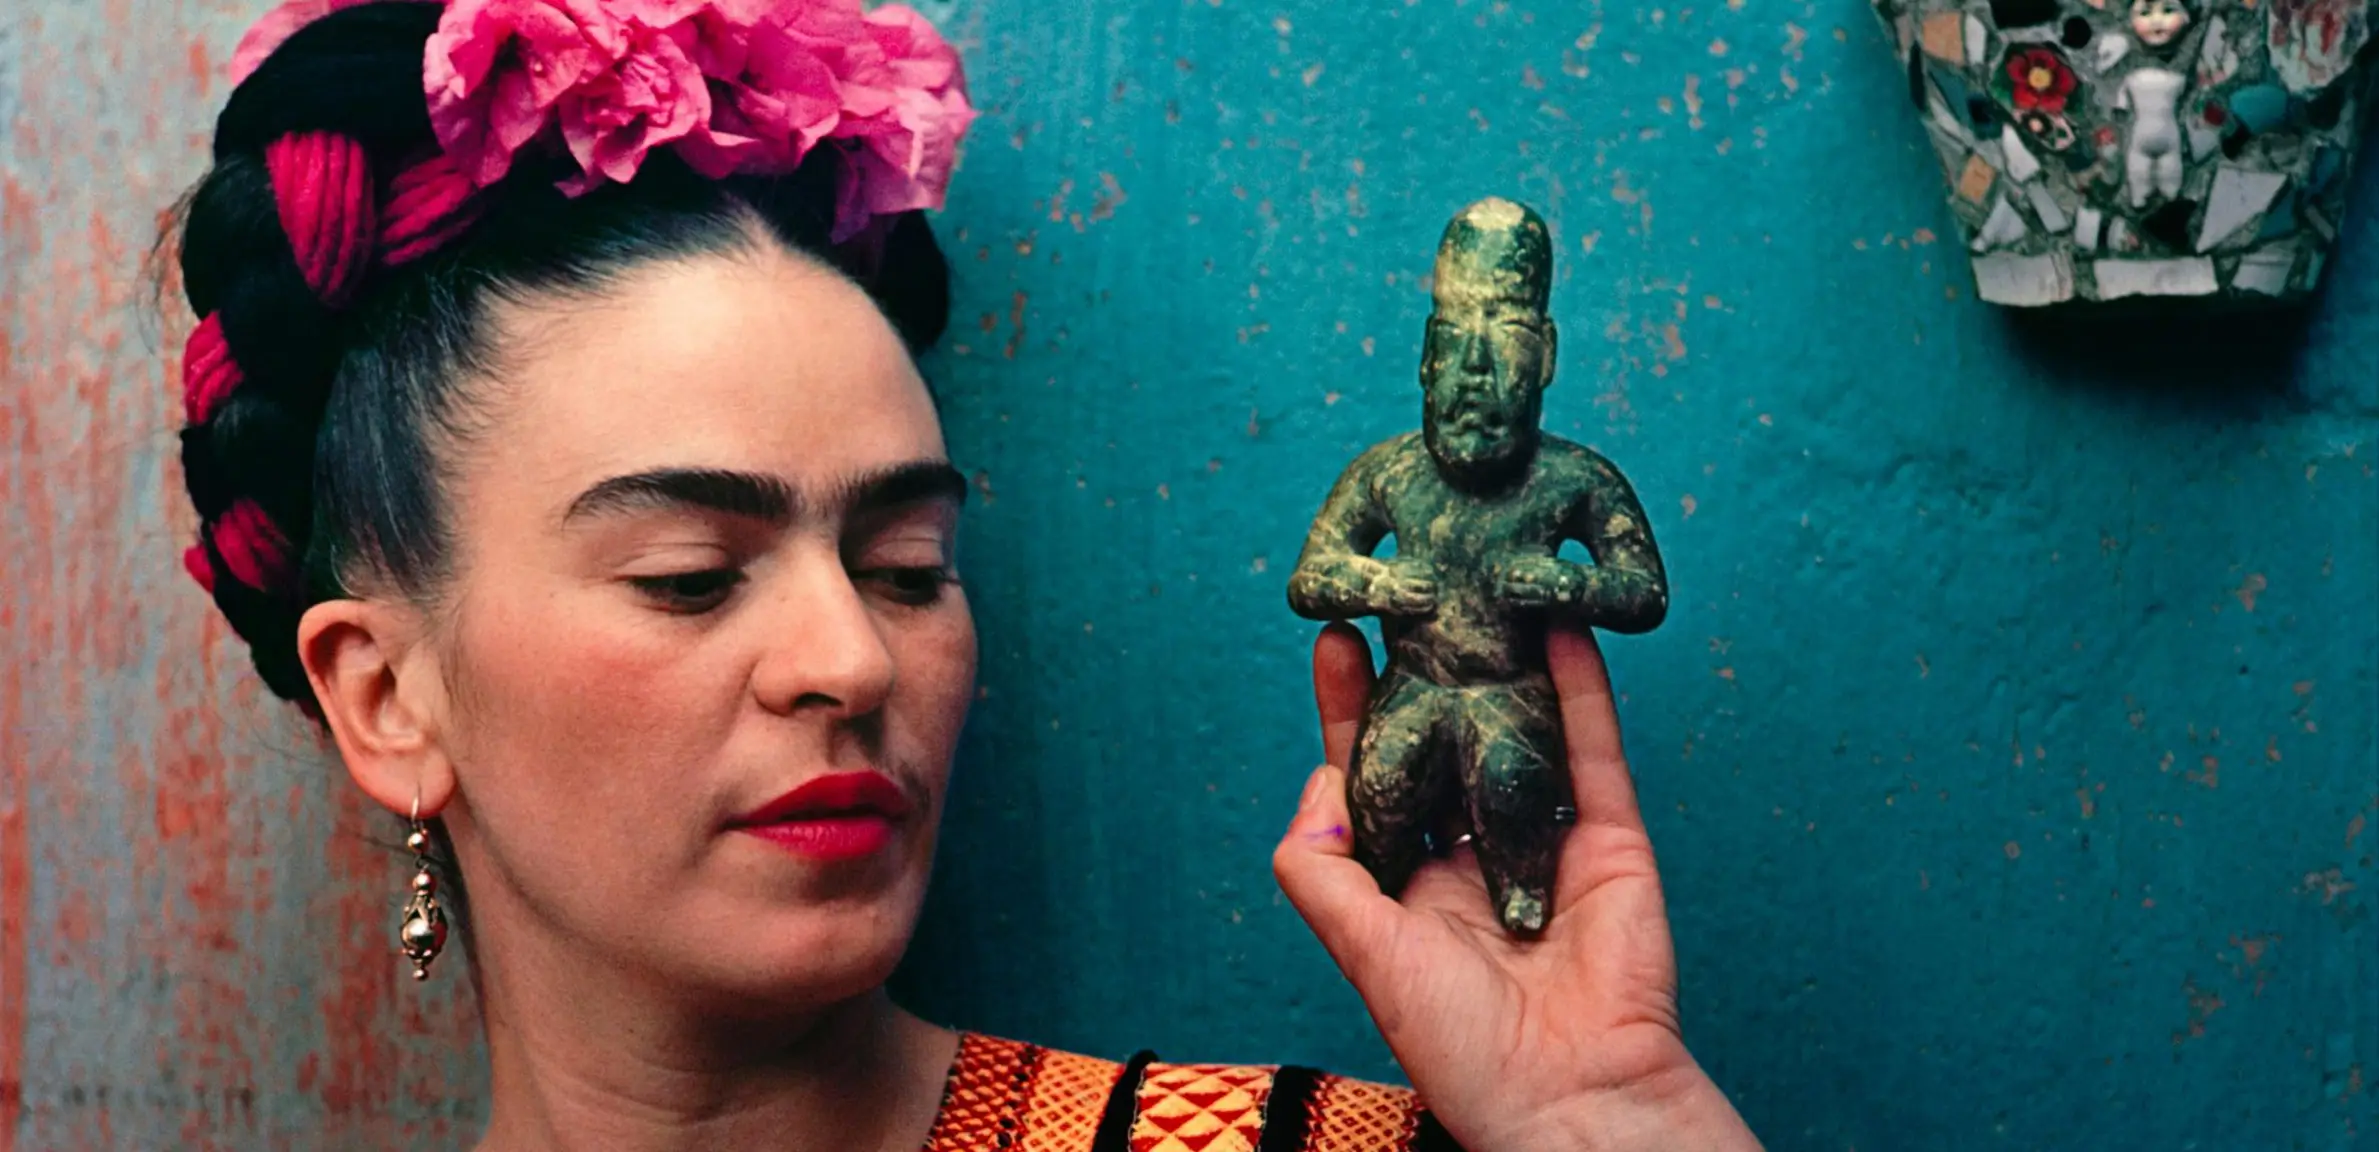 Mexican artist Frida Kahlo